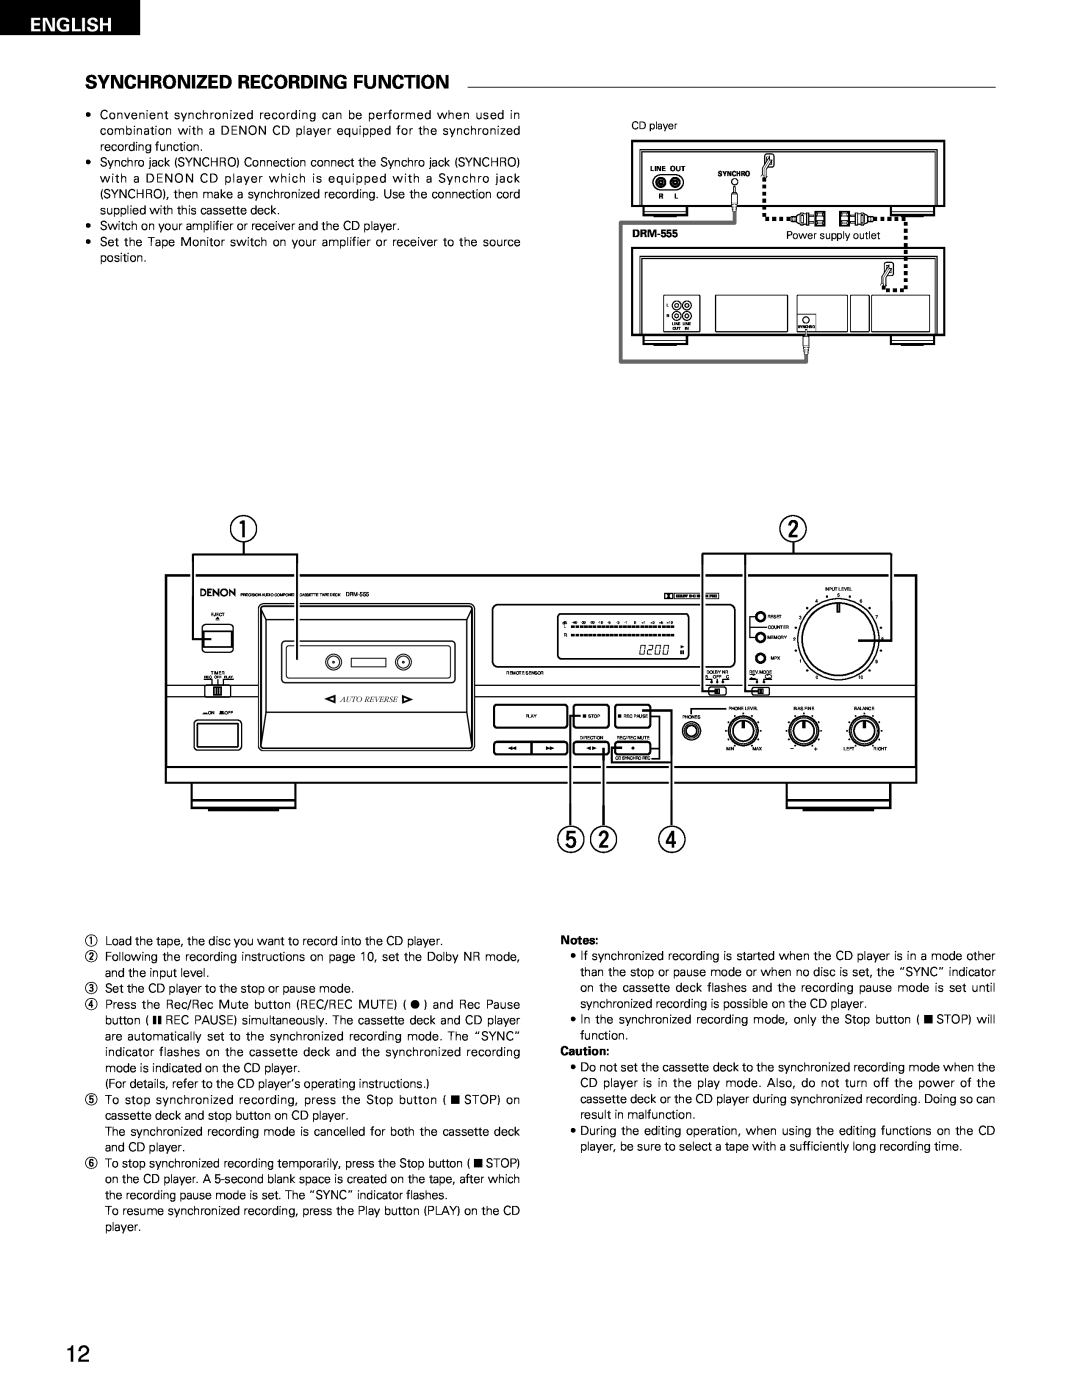 Denon DRM-555 manual Synchronized Recording Function, English 